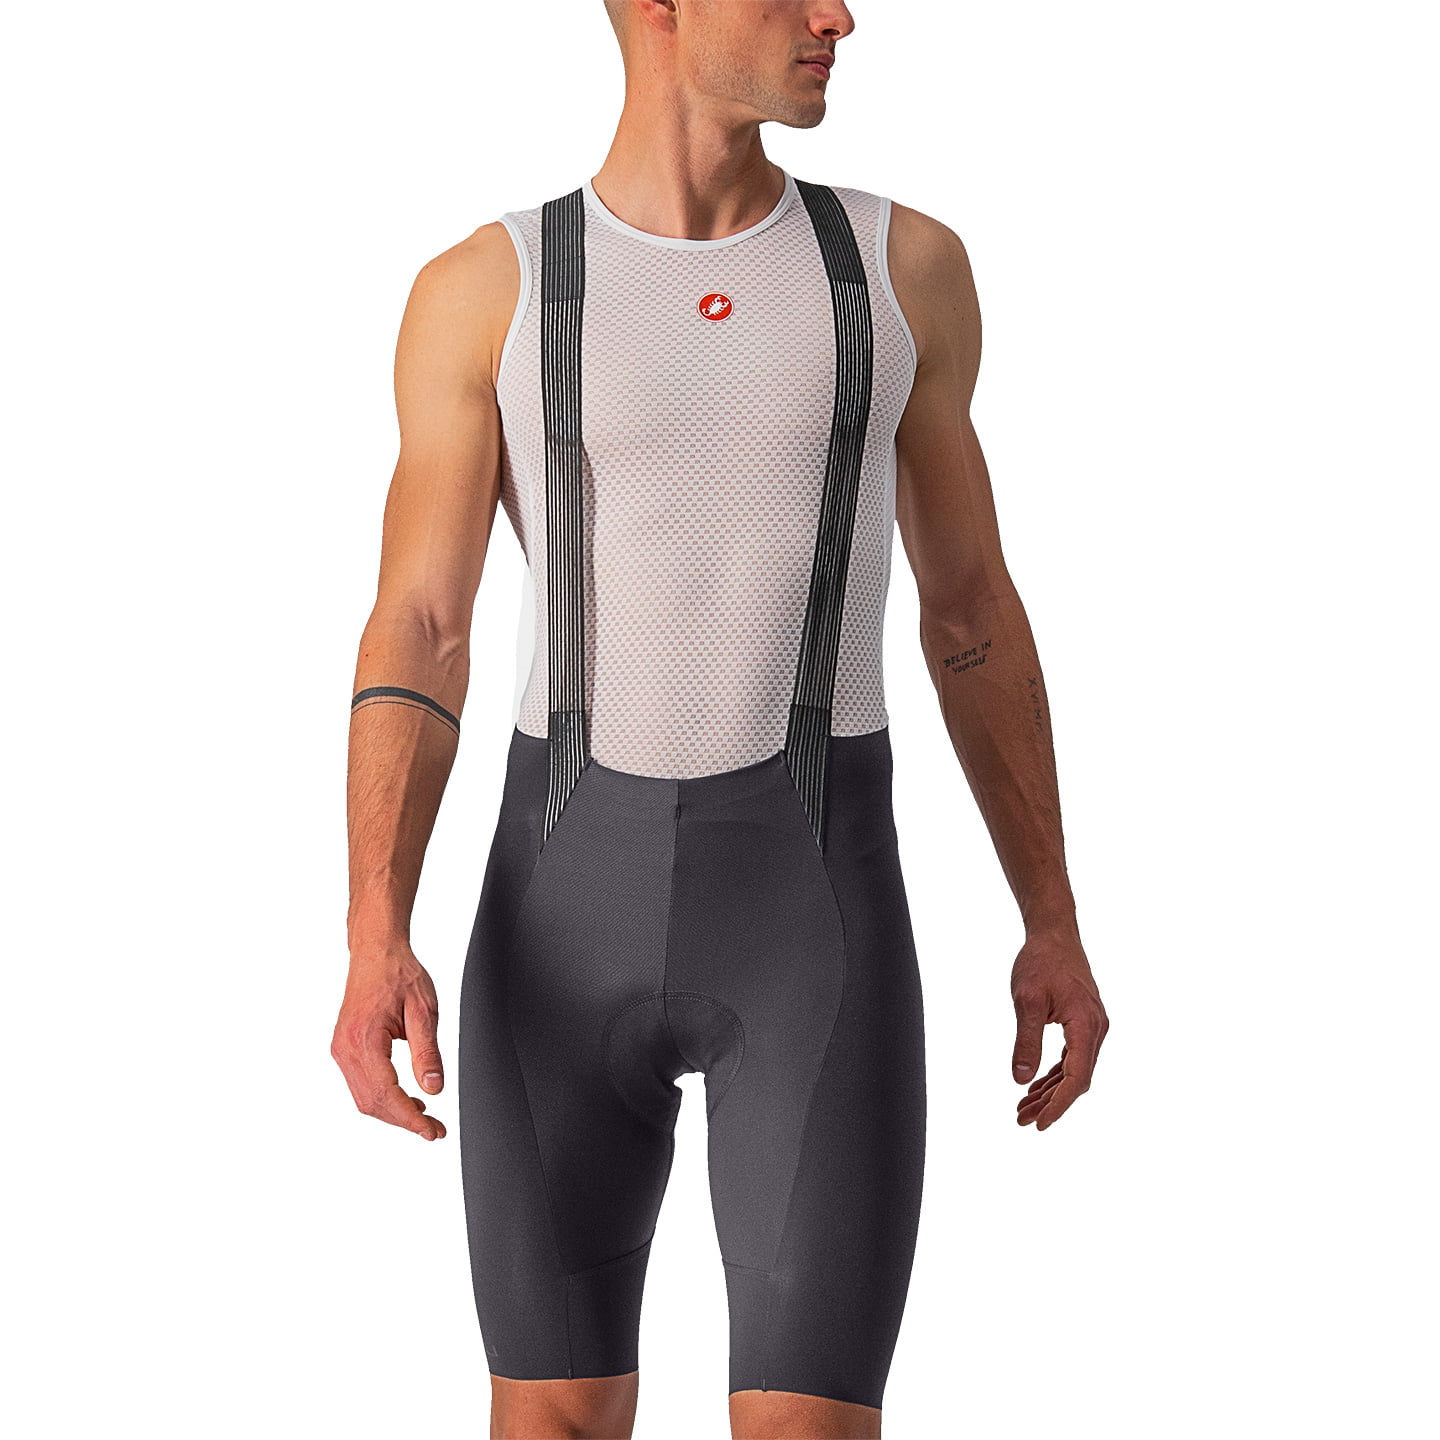 CASTELLI Free Aero RC Bib Shorts Bib Shorts, for men, size M, Cycle shorts, Cycling clothing